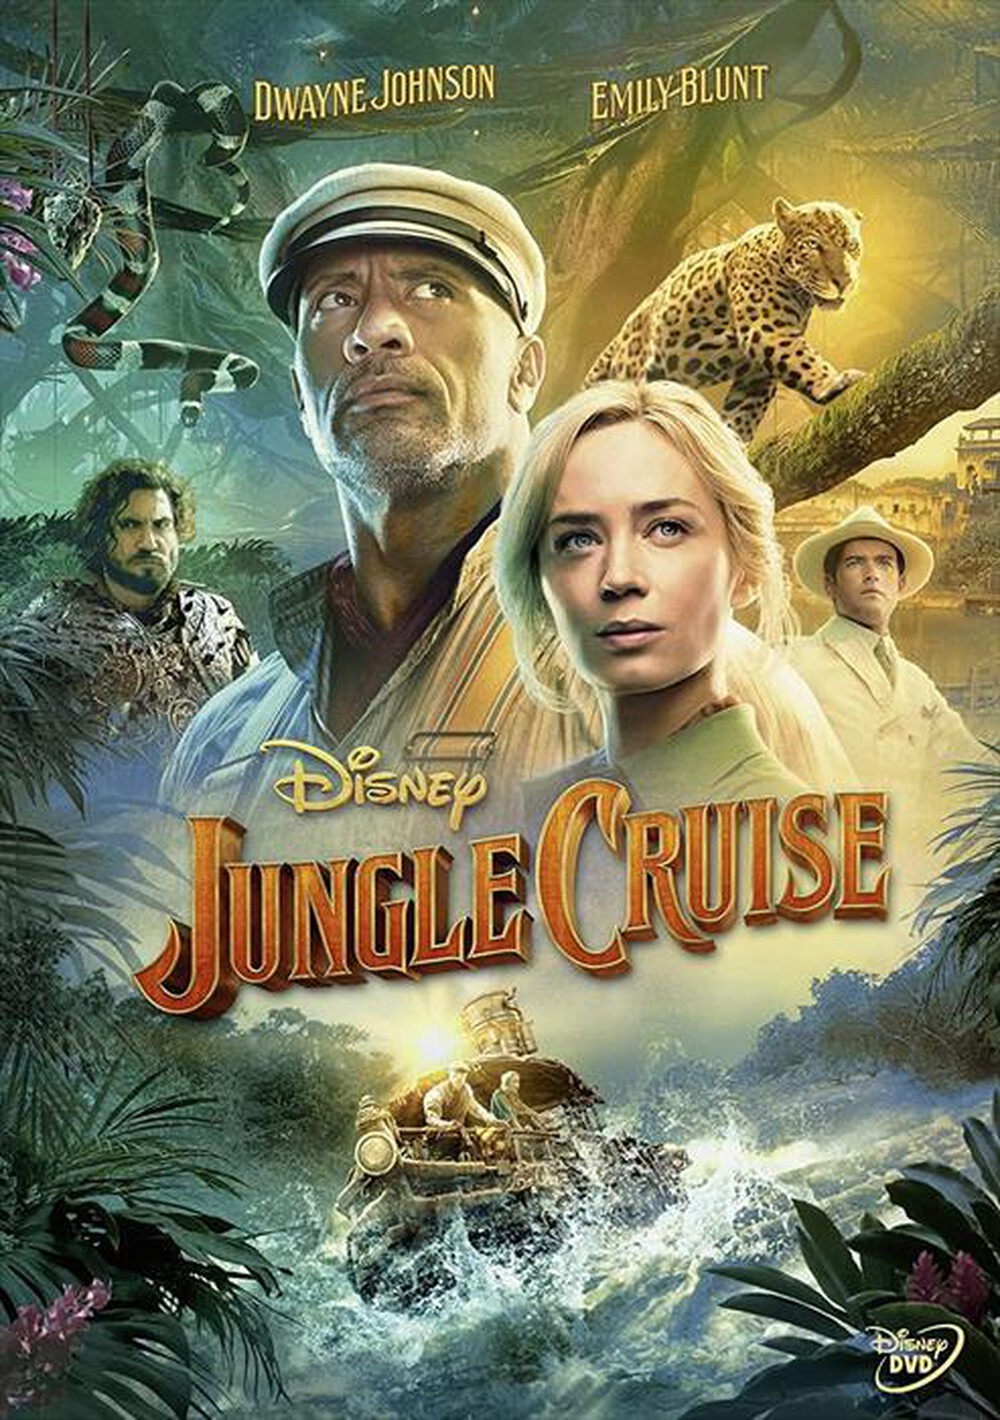 "EAGLE PICTURES - Jungle Cruise"